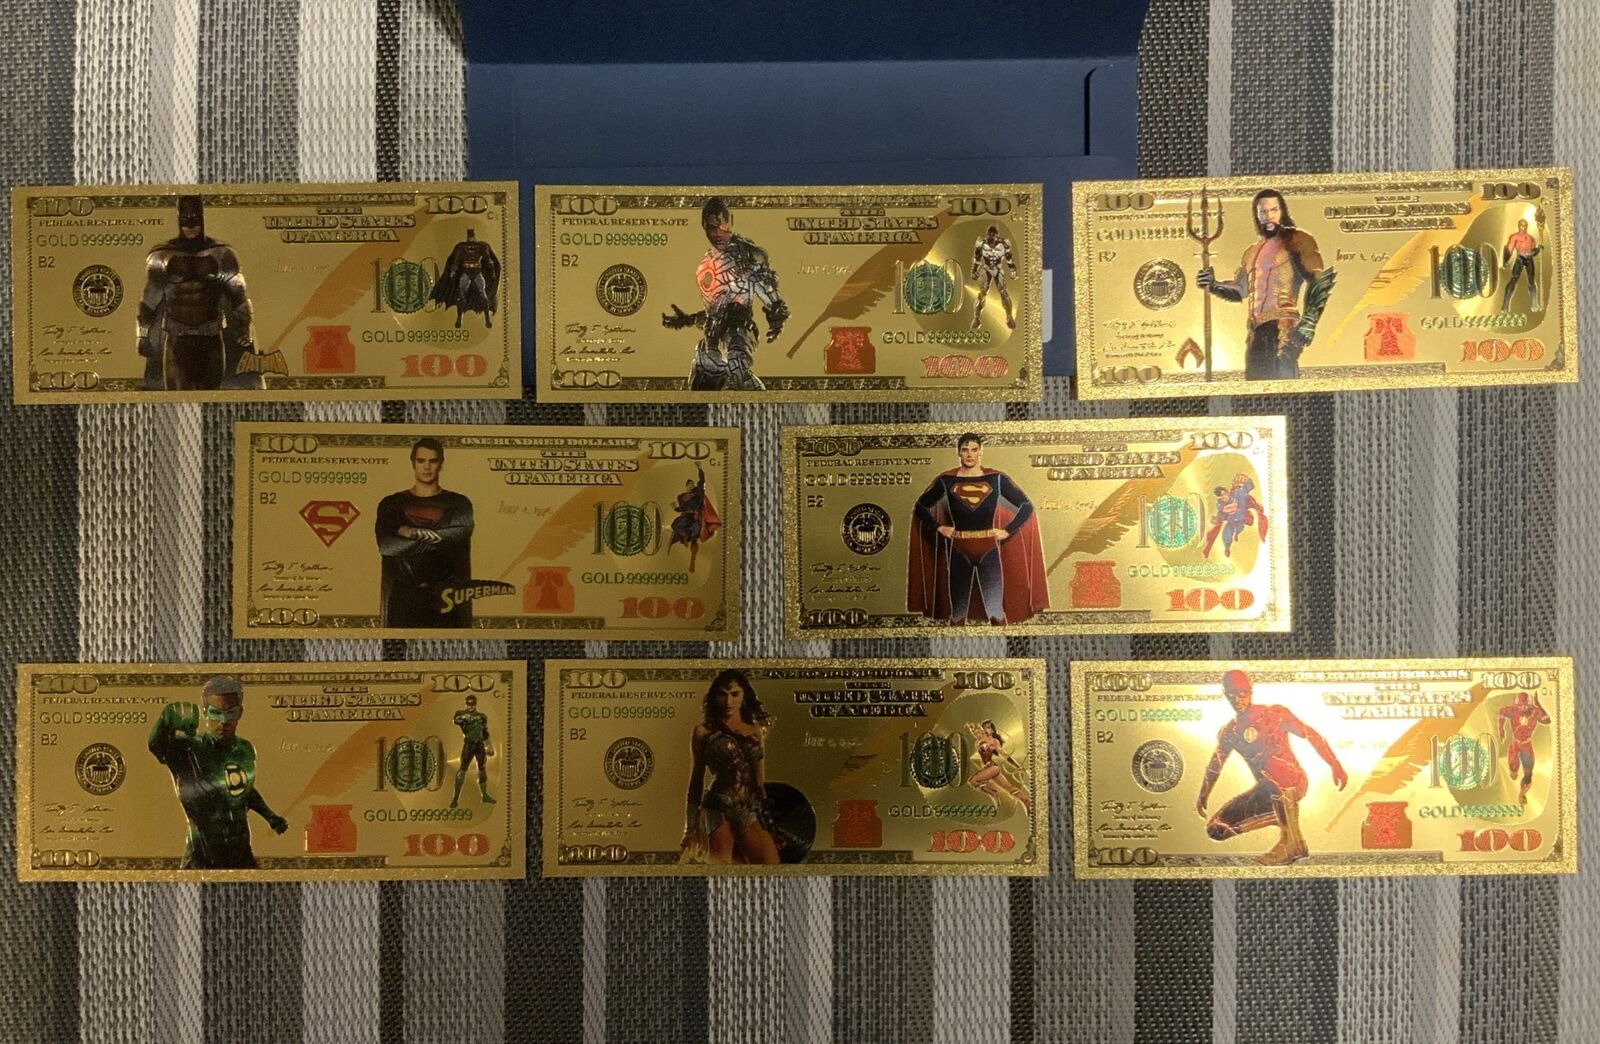 24k gold plated DC Comics gold foil banknote Warner Brothers